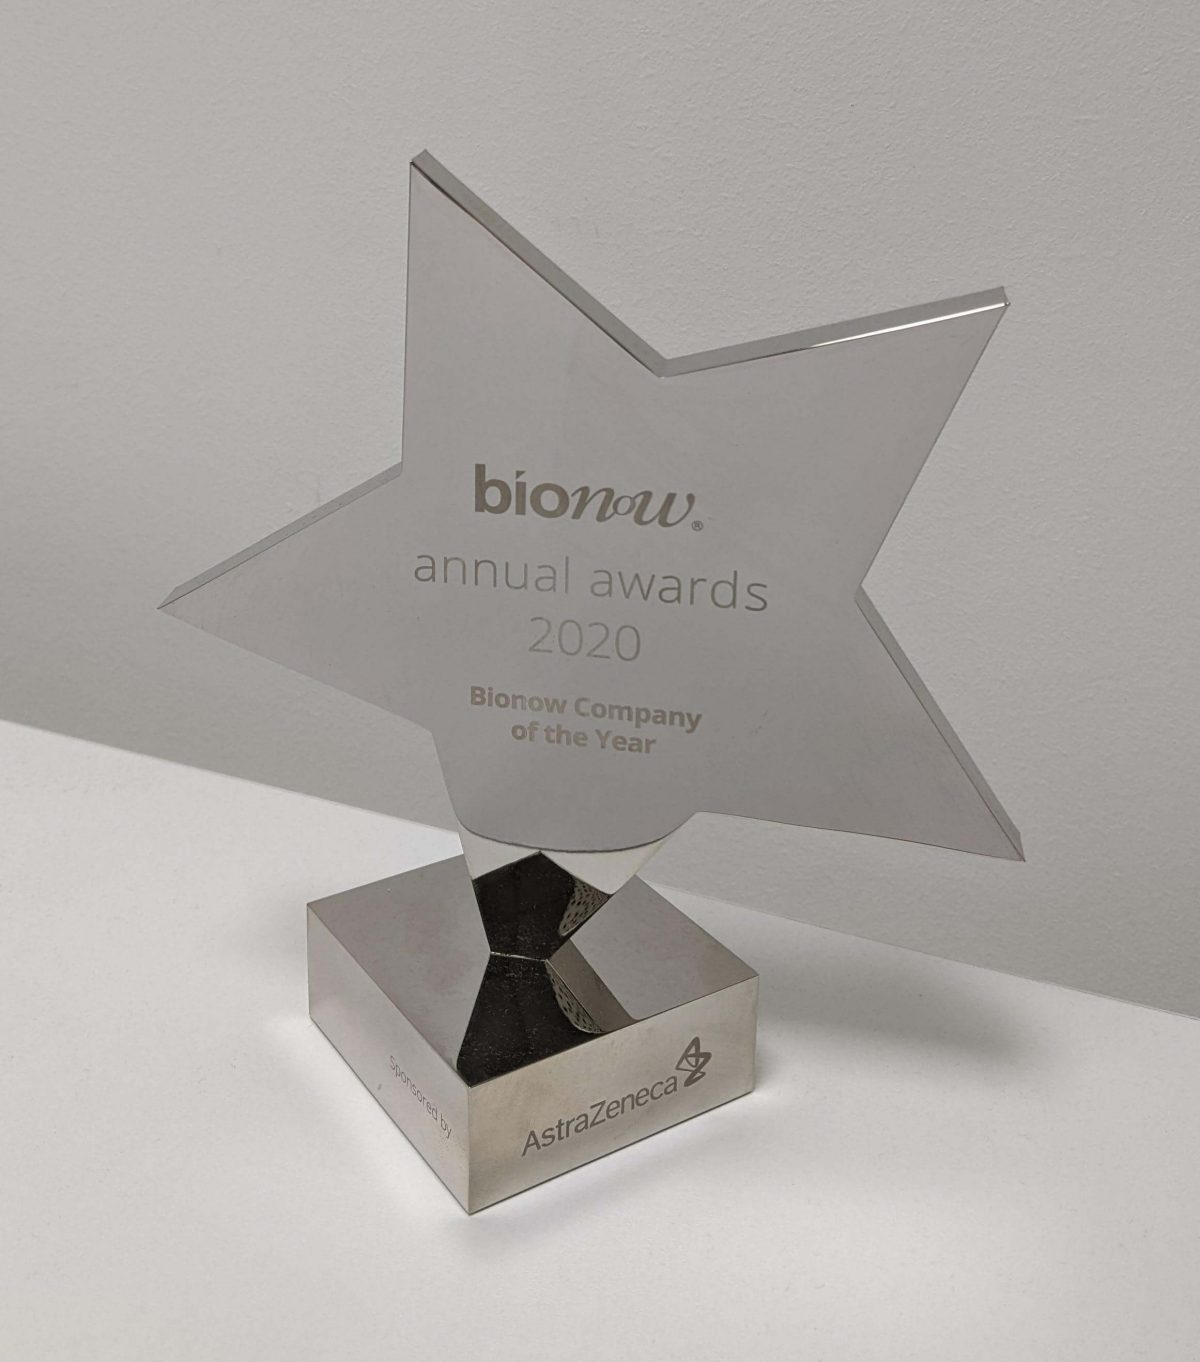 The Bionow Company of the Year award